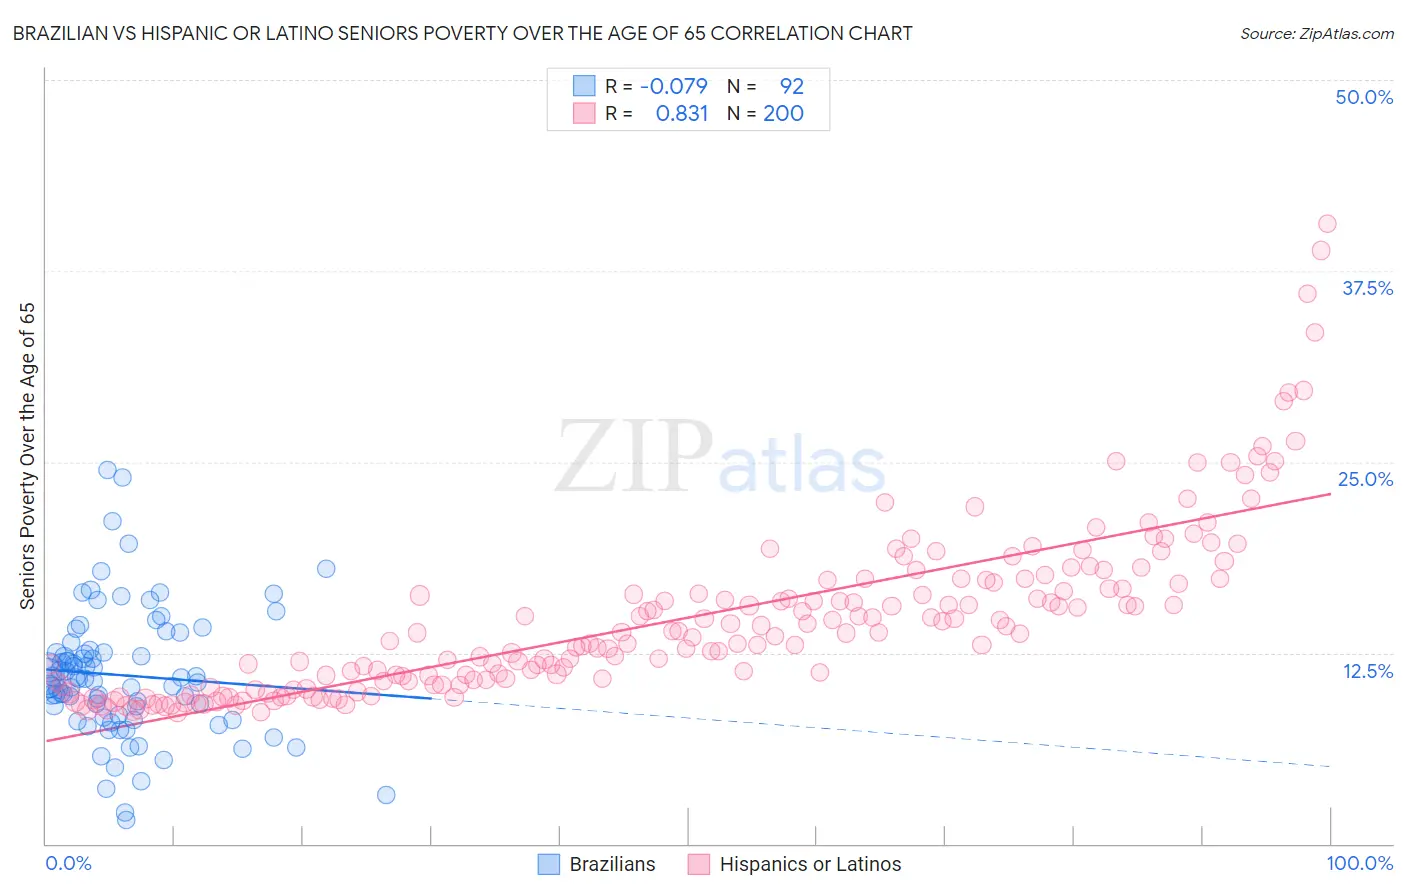 Brazilian vs Hispanic or Latino Seniors Poverty Over the Age of 65